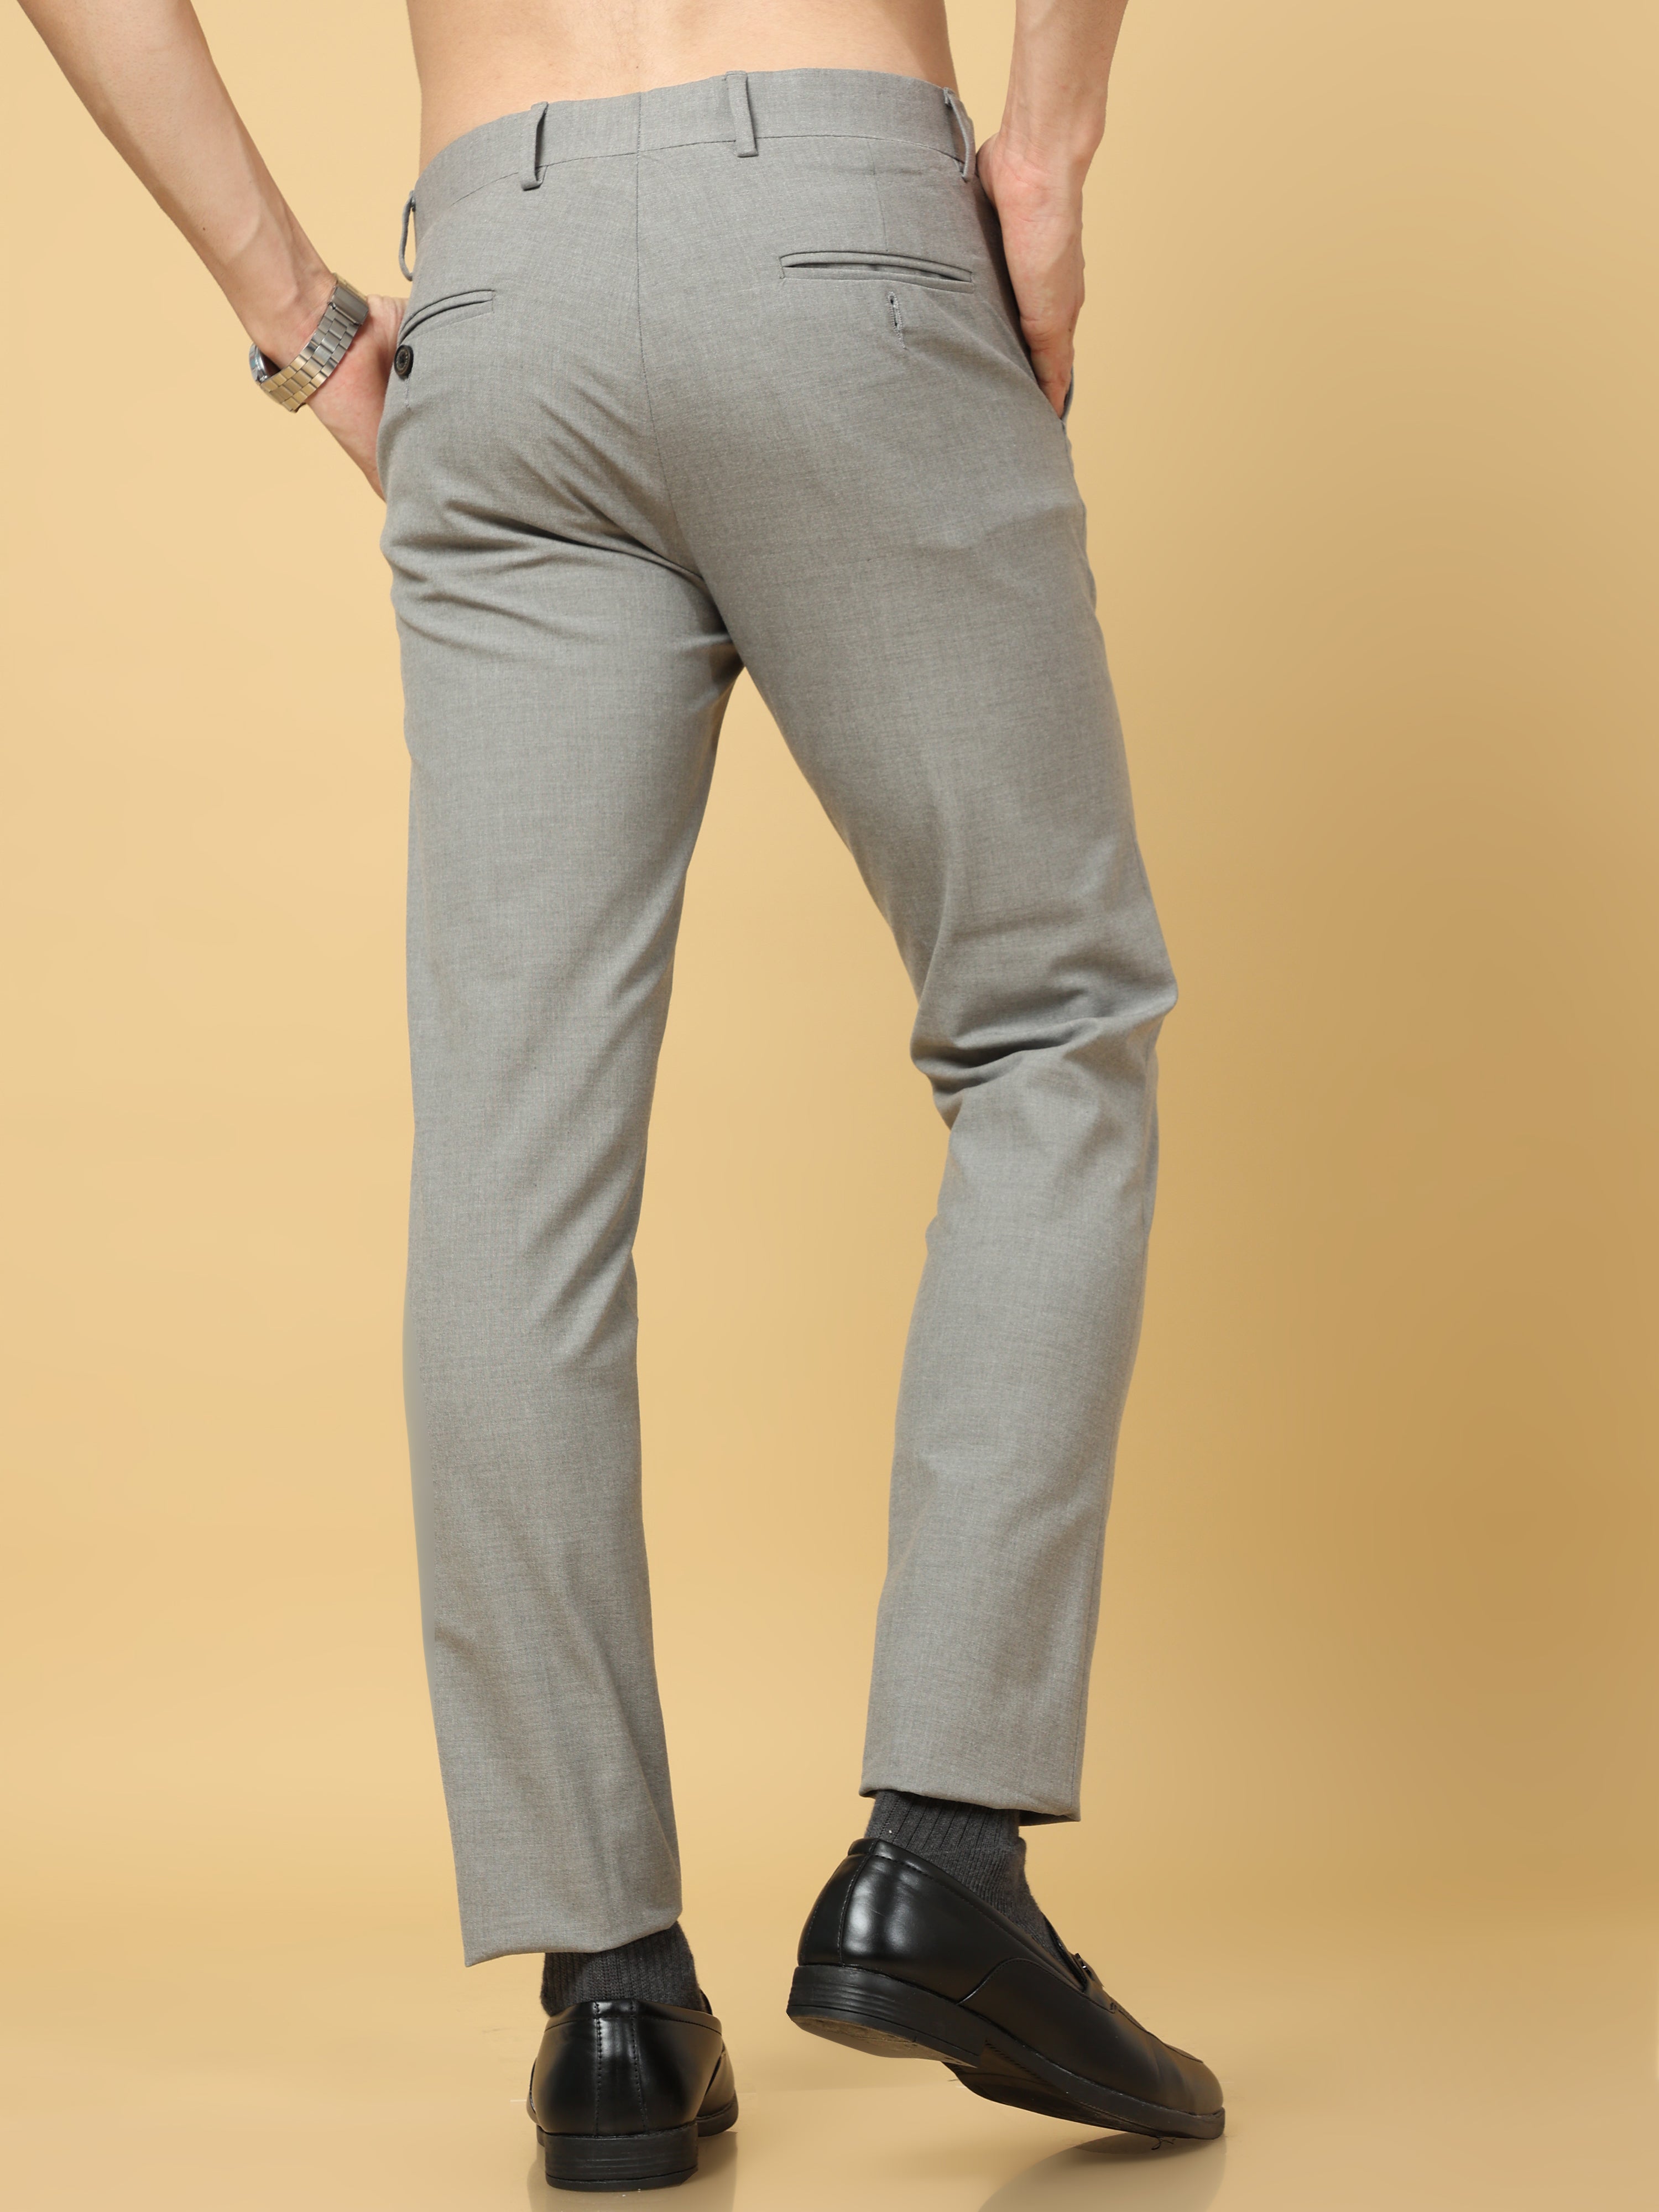 Poly Blend Premium Slim Fit Formal Trouser For Men (Light Grey) at Rs  389/piece in Bhilwara